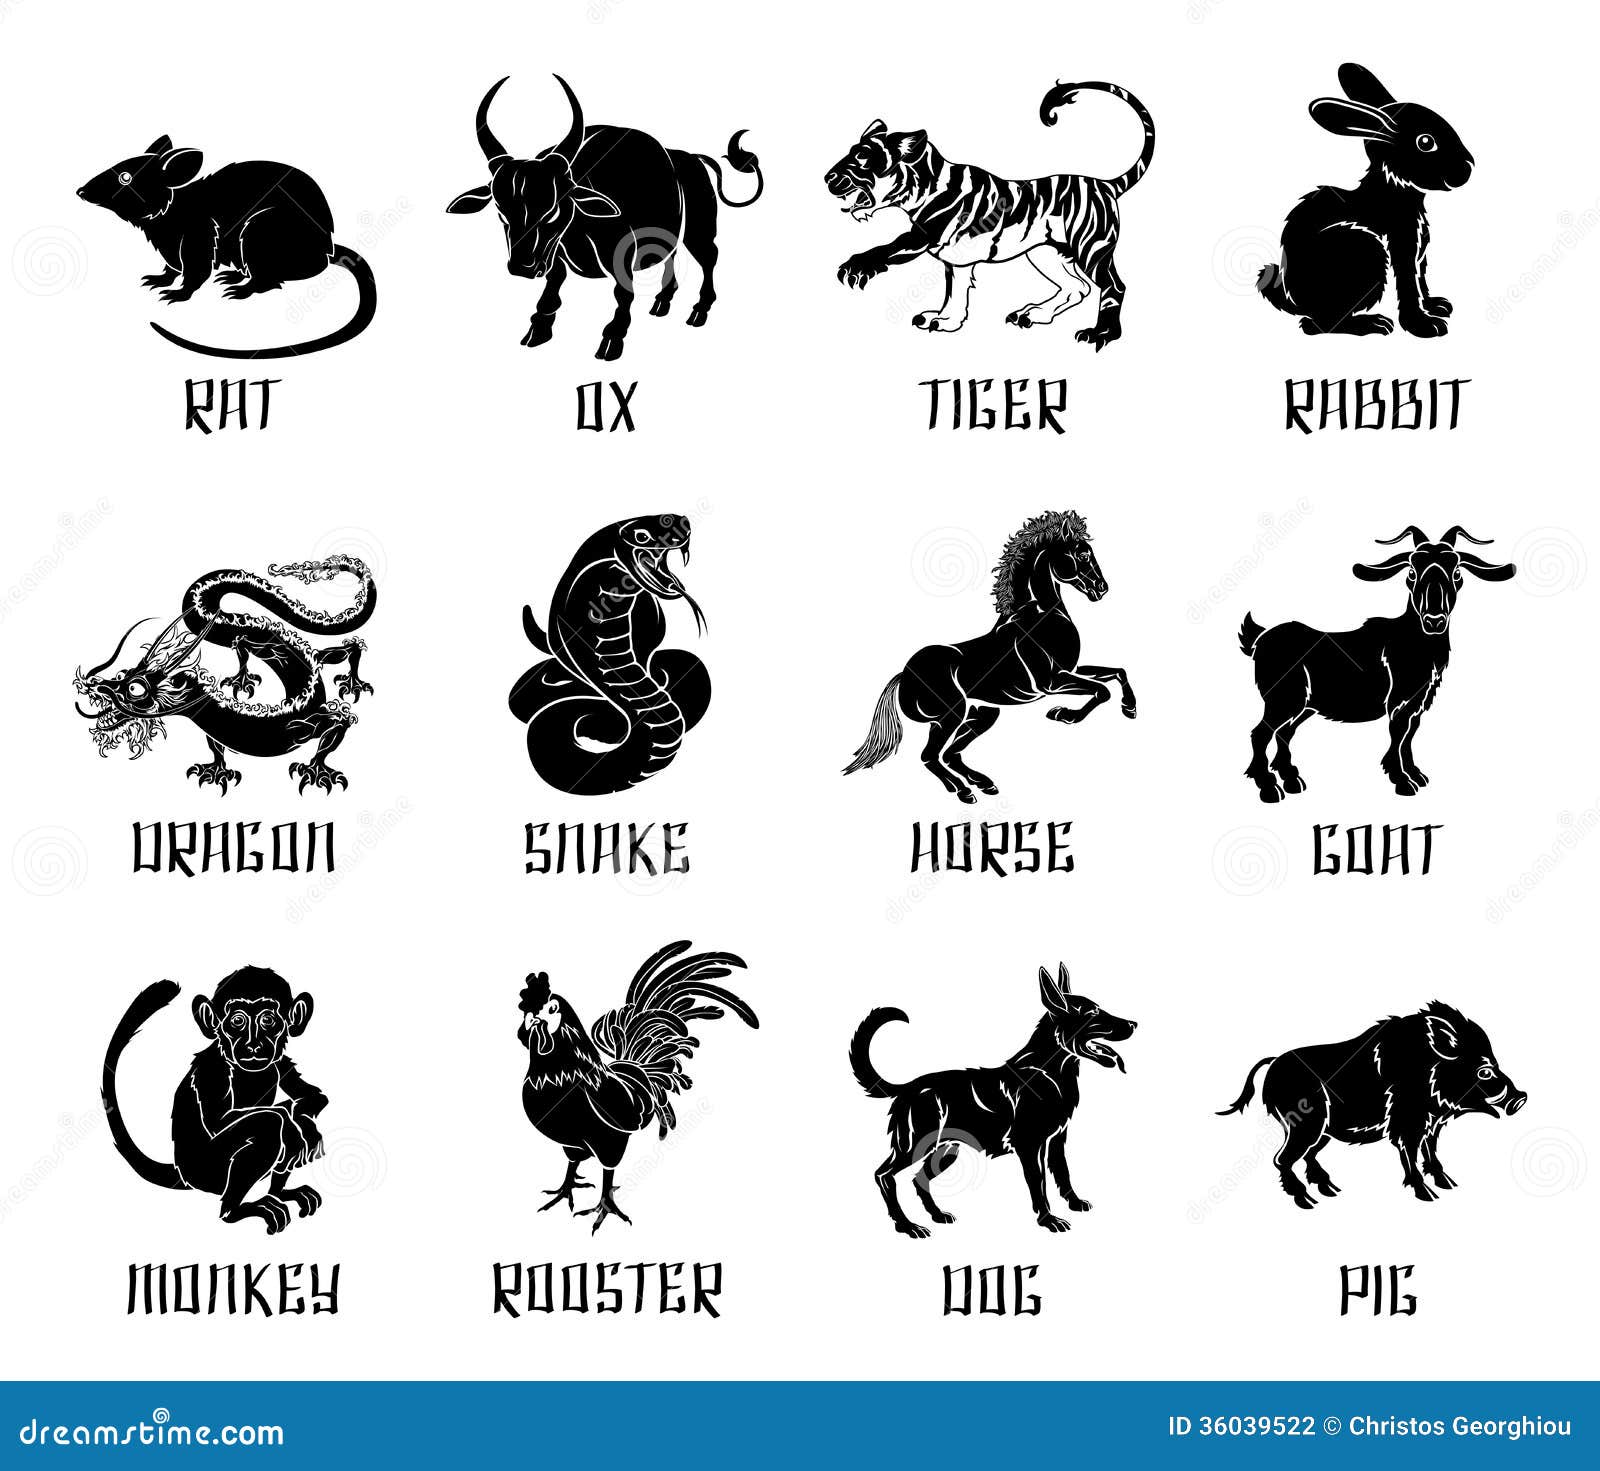 chinese zodiac animal icons illustrations all twelve animals 36039522